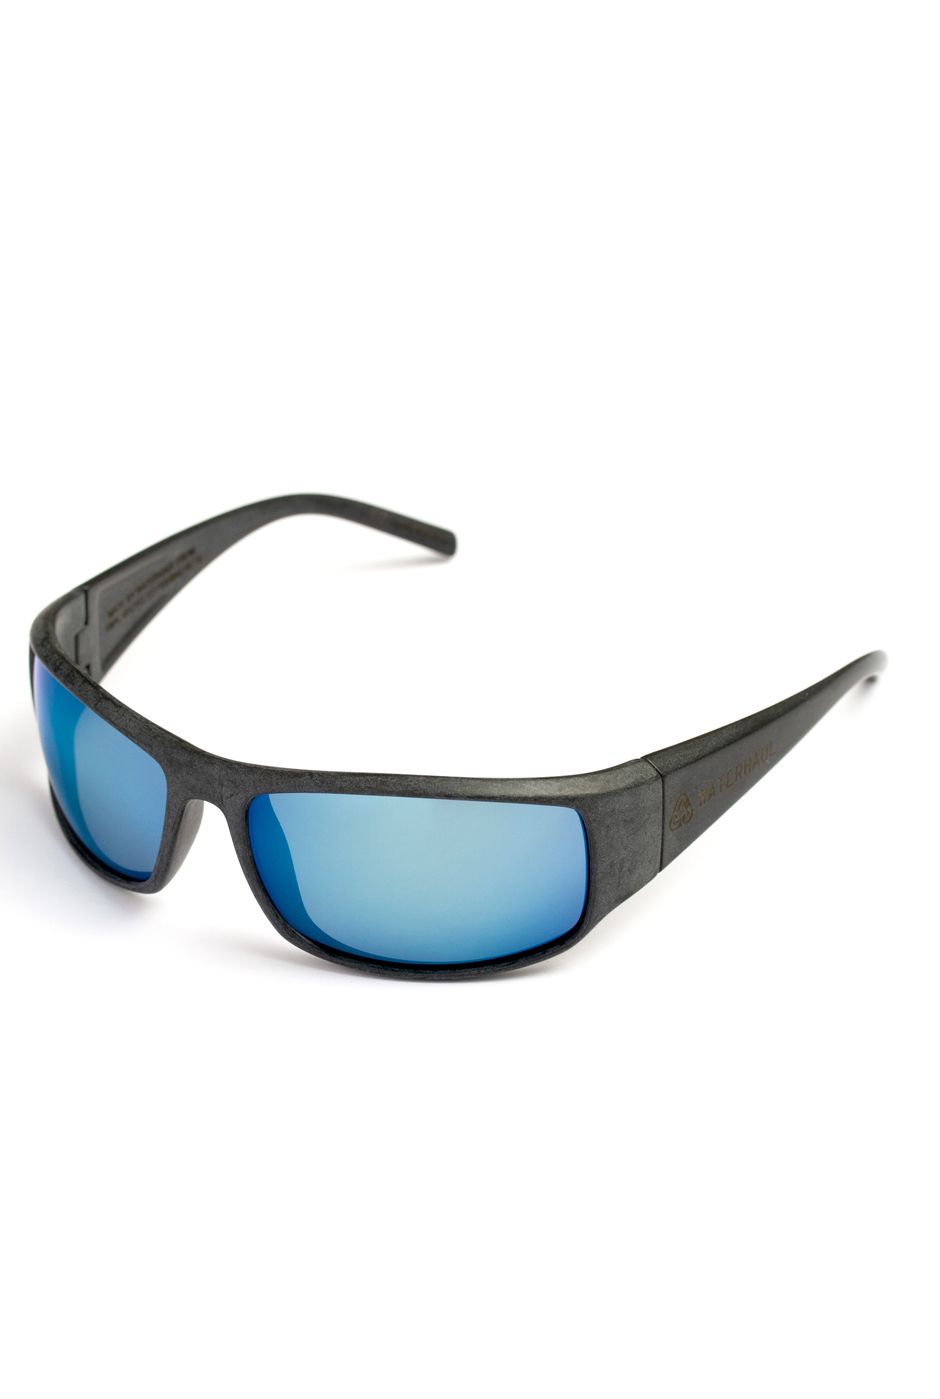 Waterhaul Zennor Recycled Sunglasses Slate